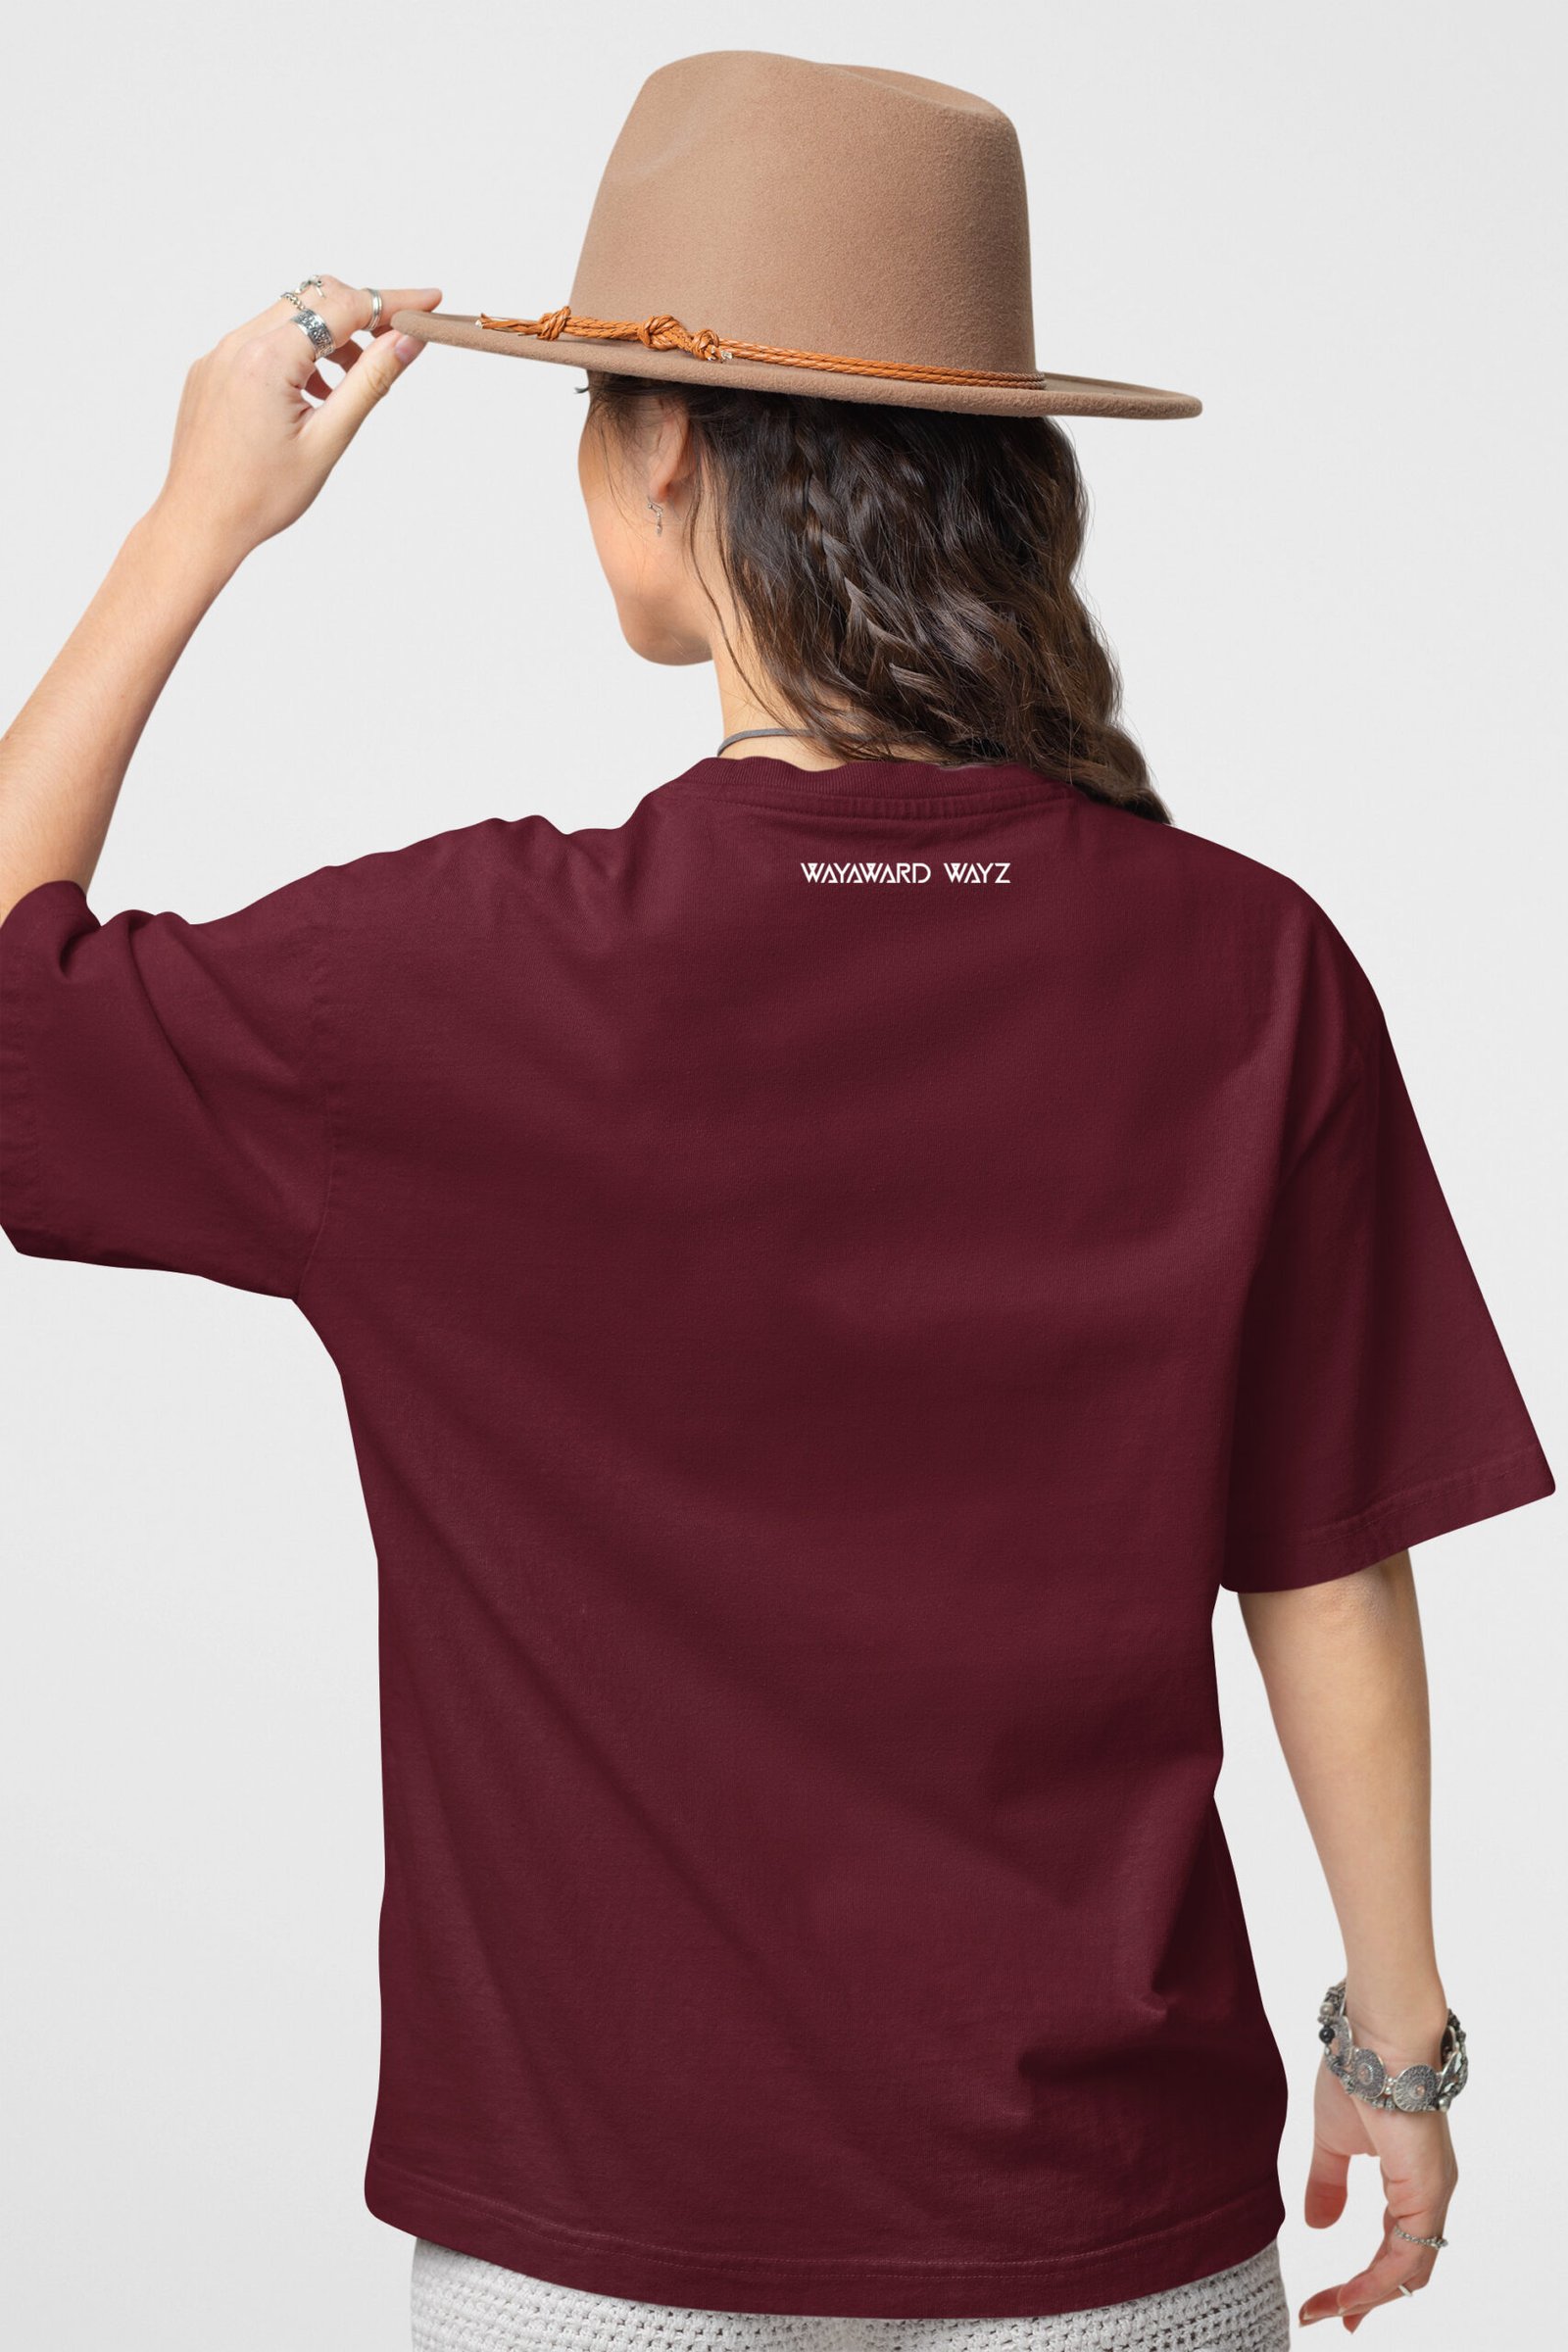 Wine T-Shirt by Wayward Wayz - Back